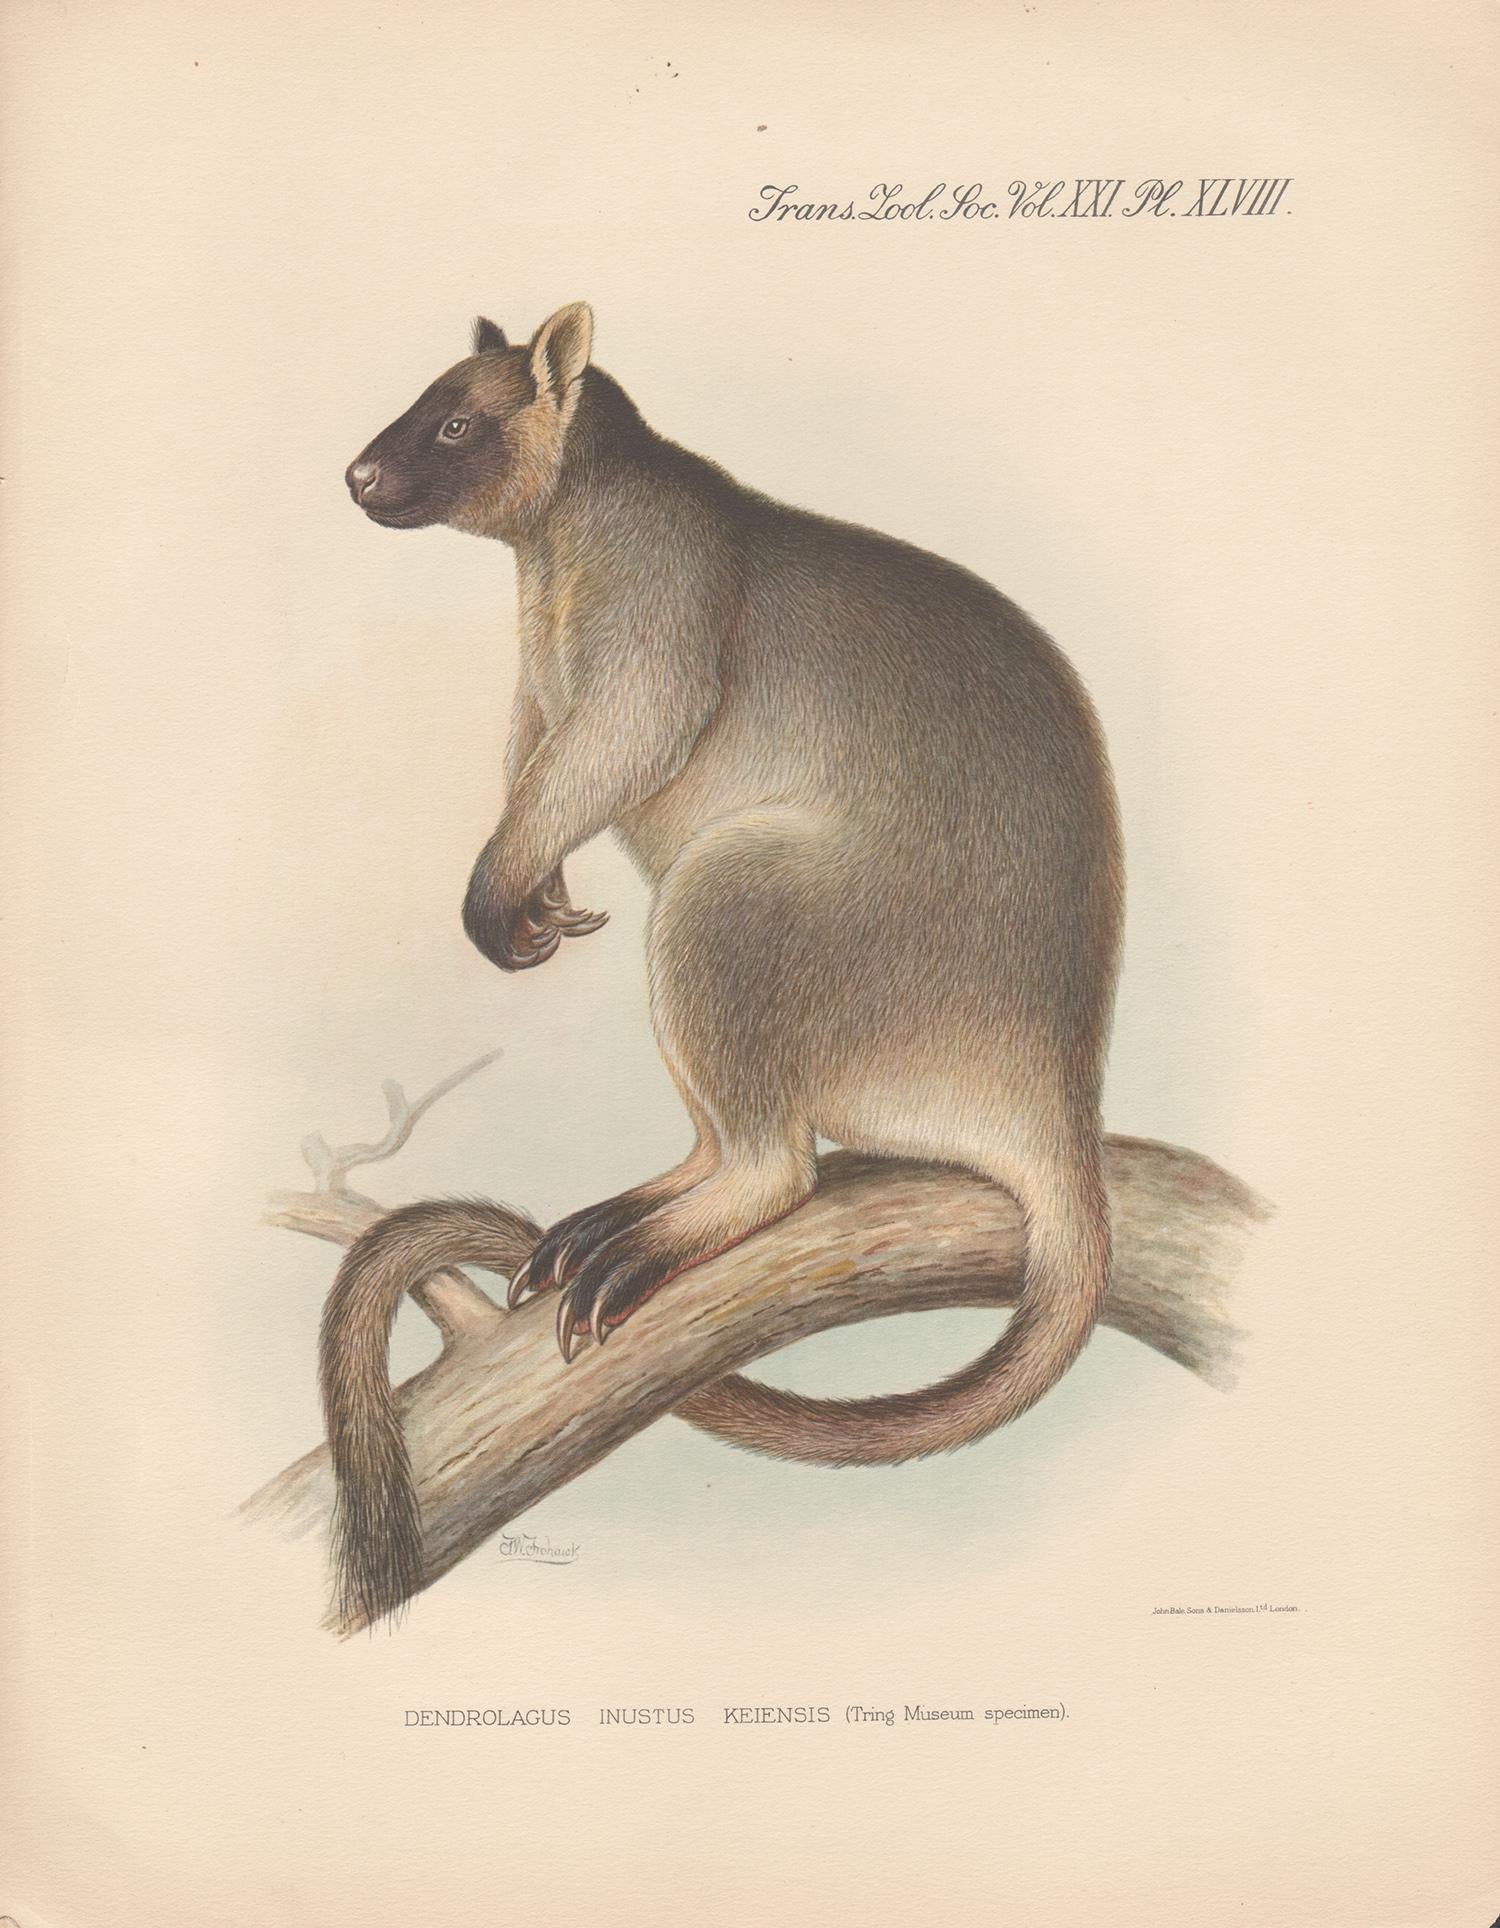 Frederick William Frohawk Animal Print - Dendrolaugus Inustus Tree Kangaroo, New Guinea, natural history lithograph, 1936